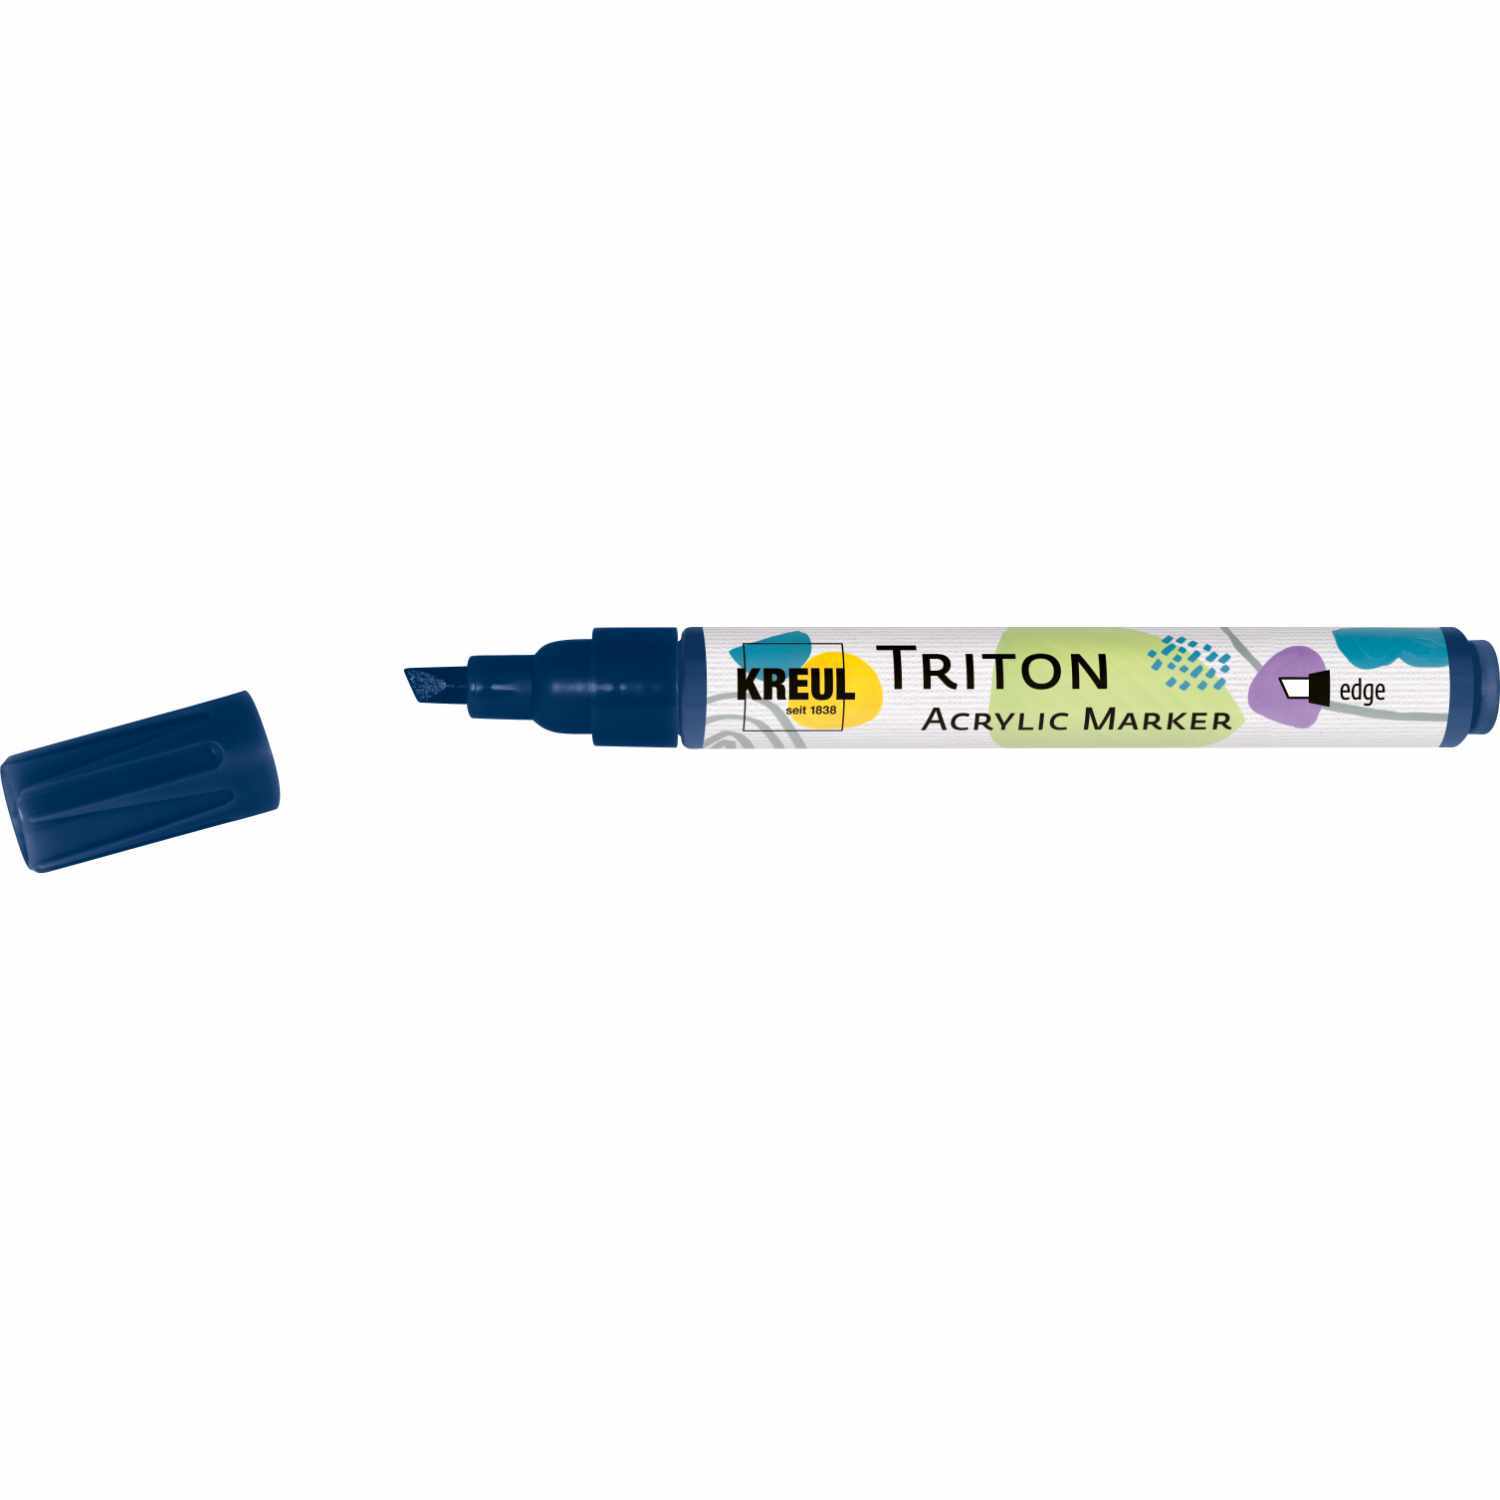 Triton Acrylic Marker edge 1-4mm